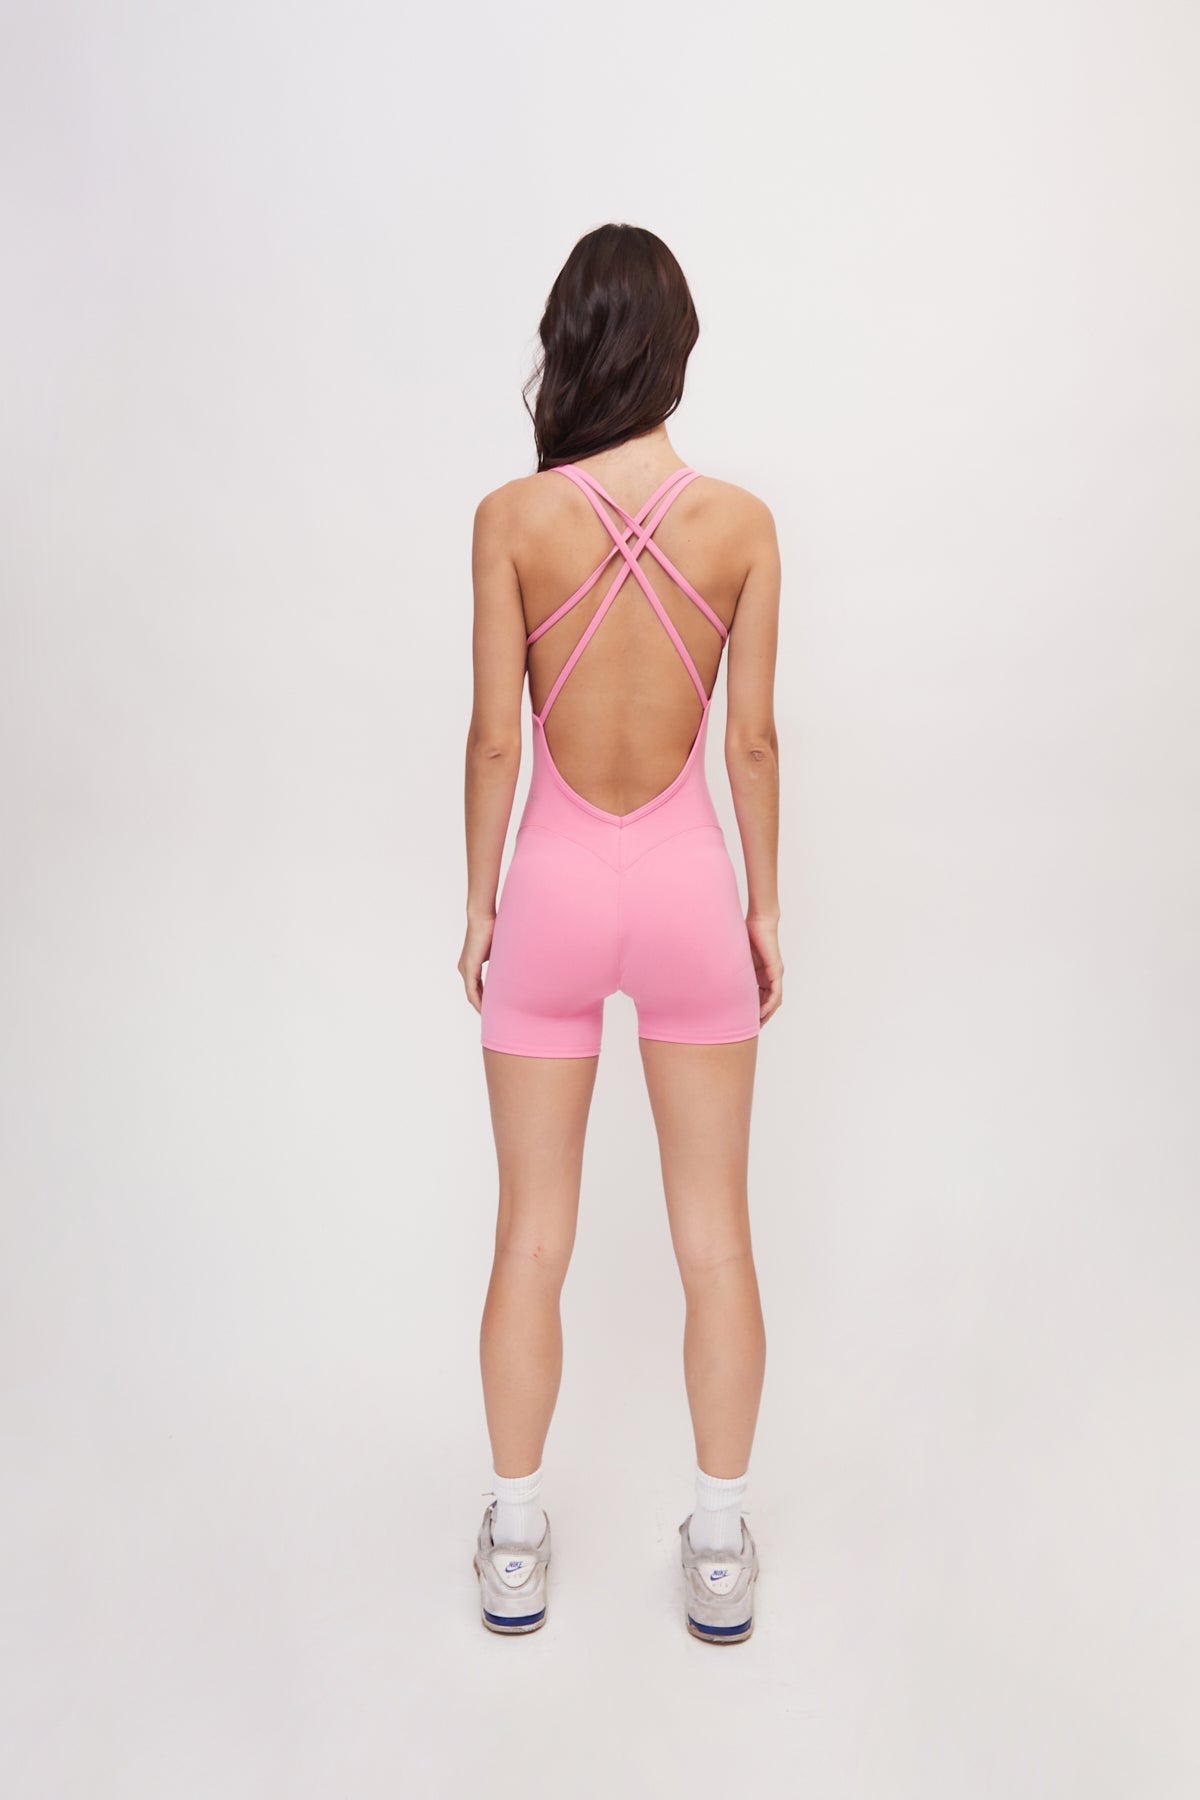 The Short Pink Bodysuit